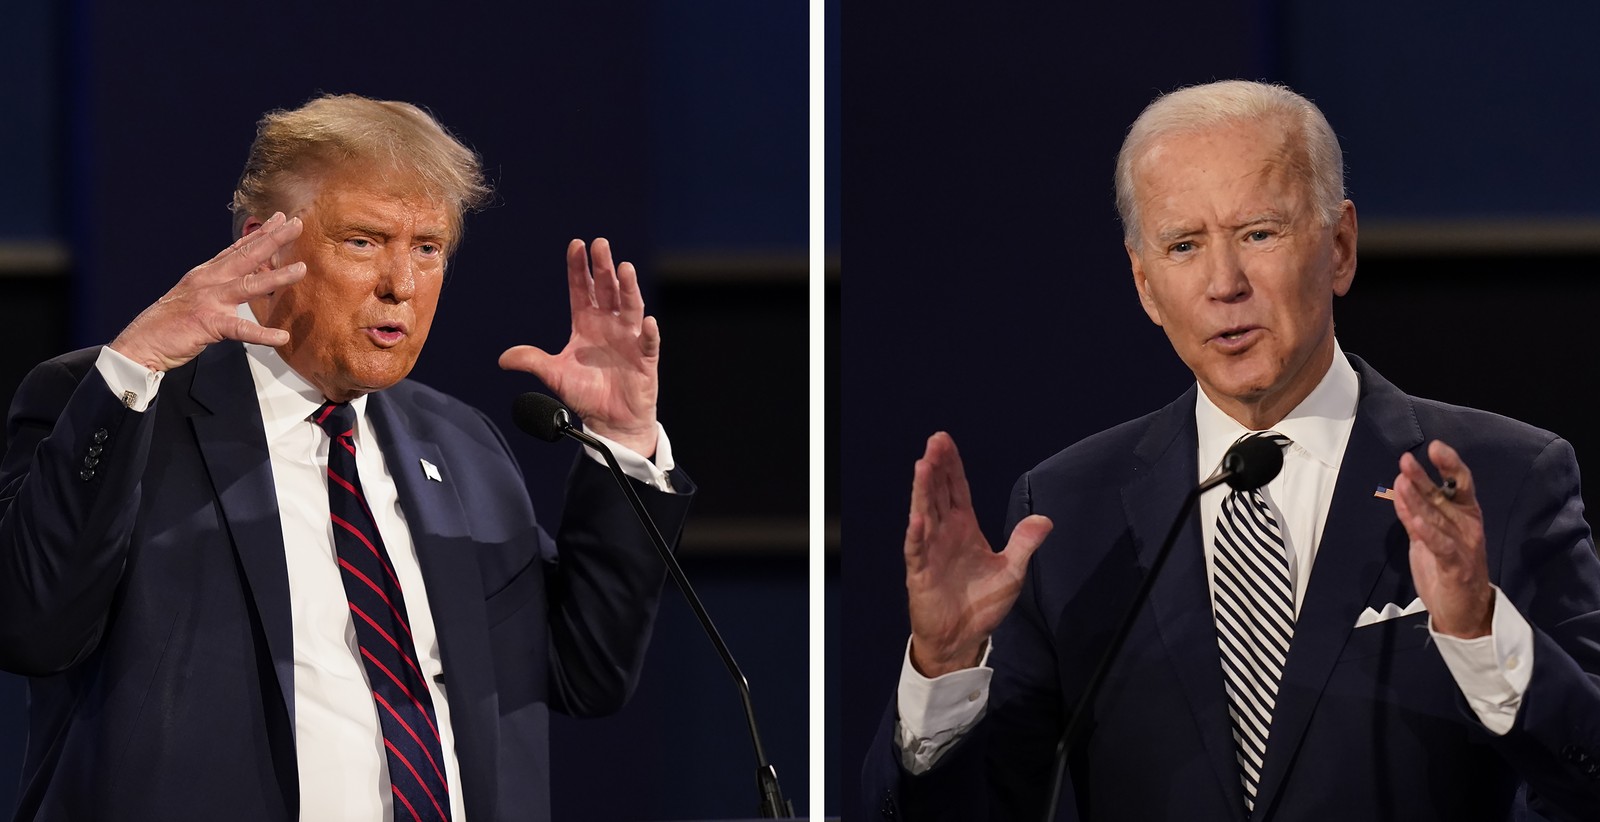 Conduta agressiva de Trump contra Biden no primeiro debate presidencial foi considerada repulsiva por muitos americanos